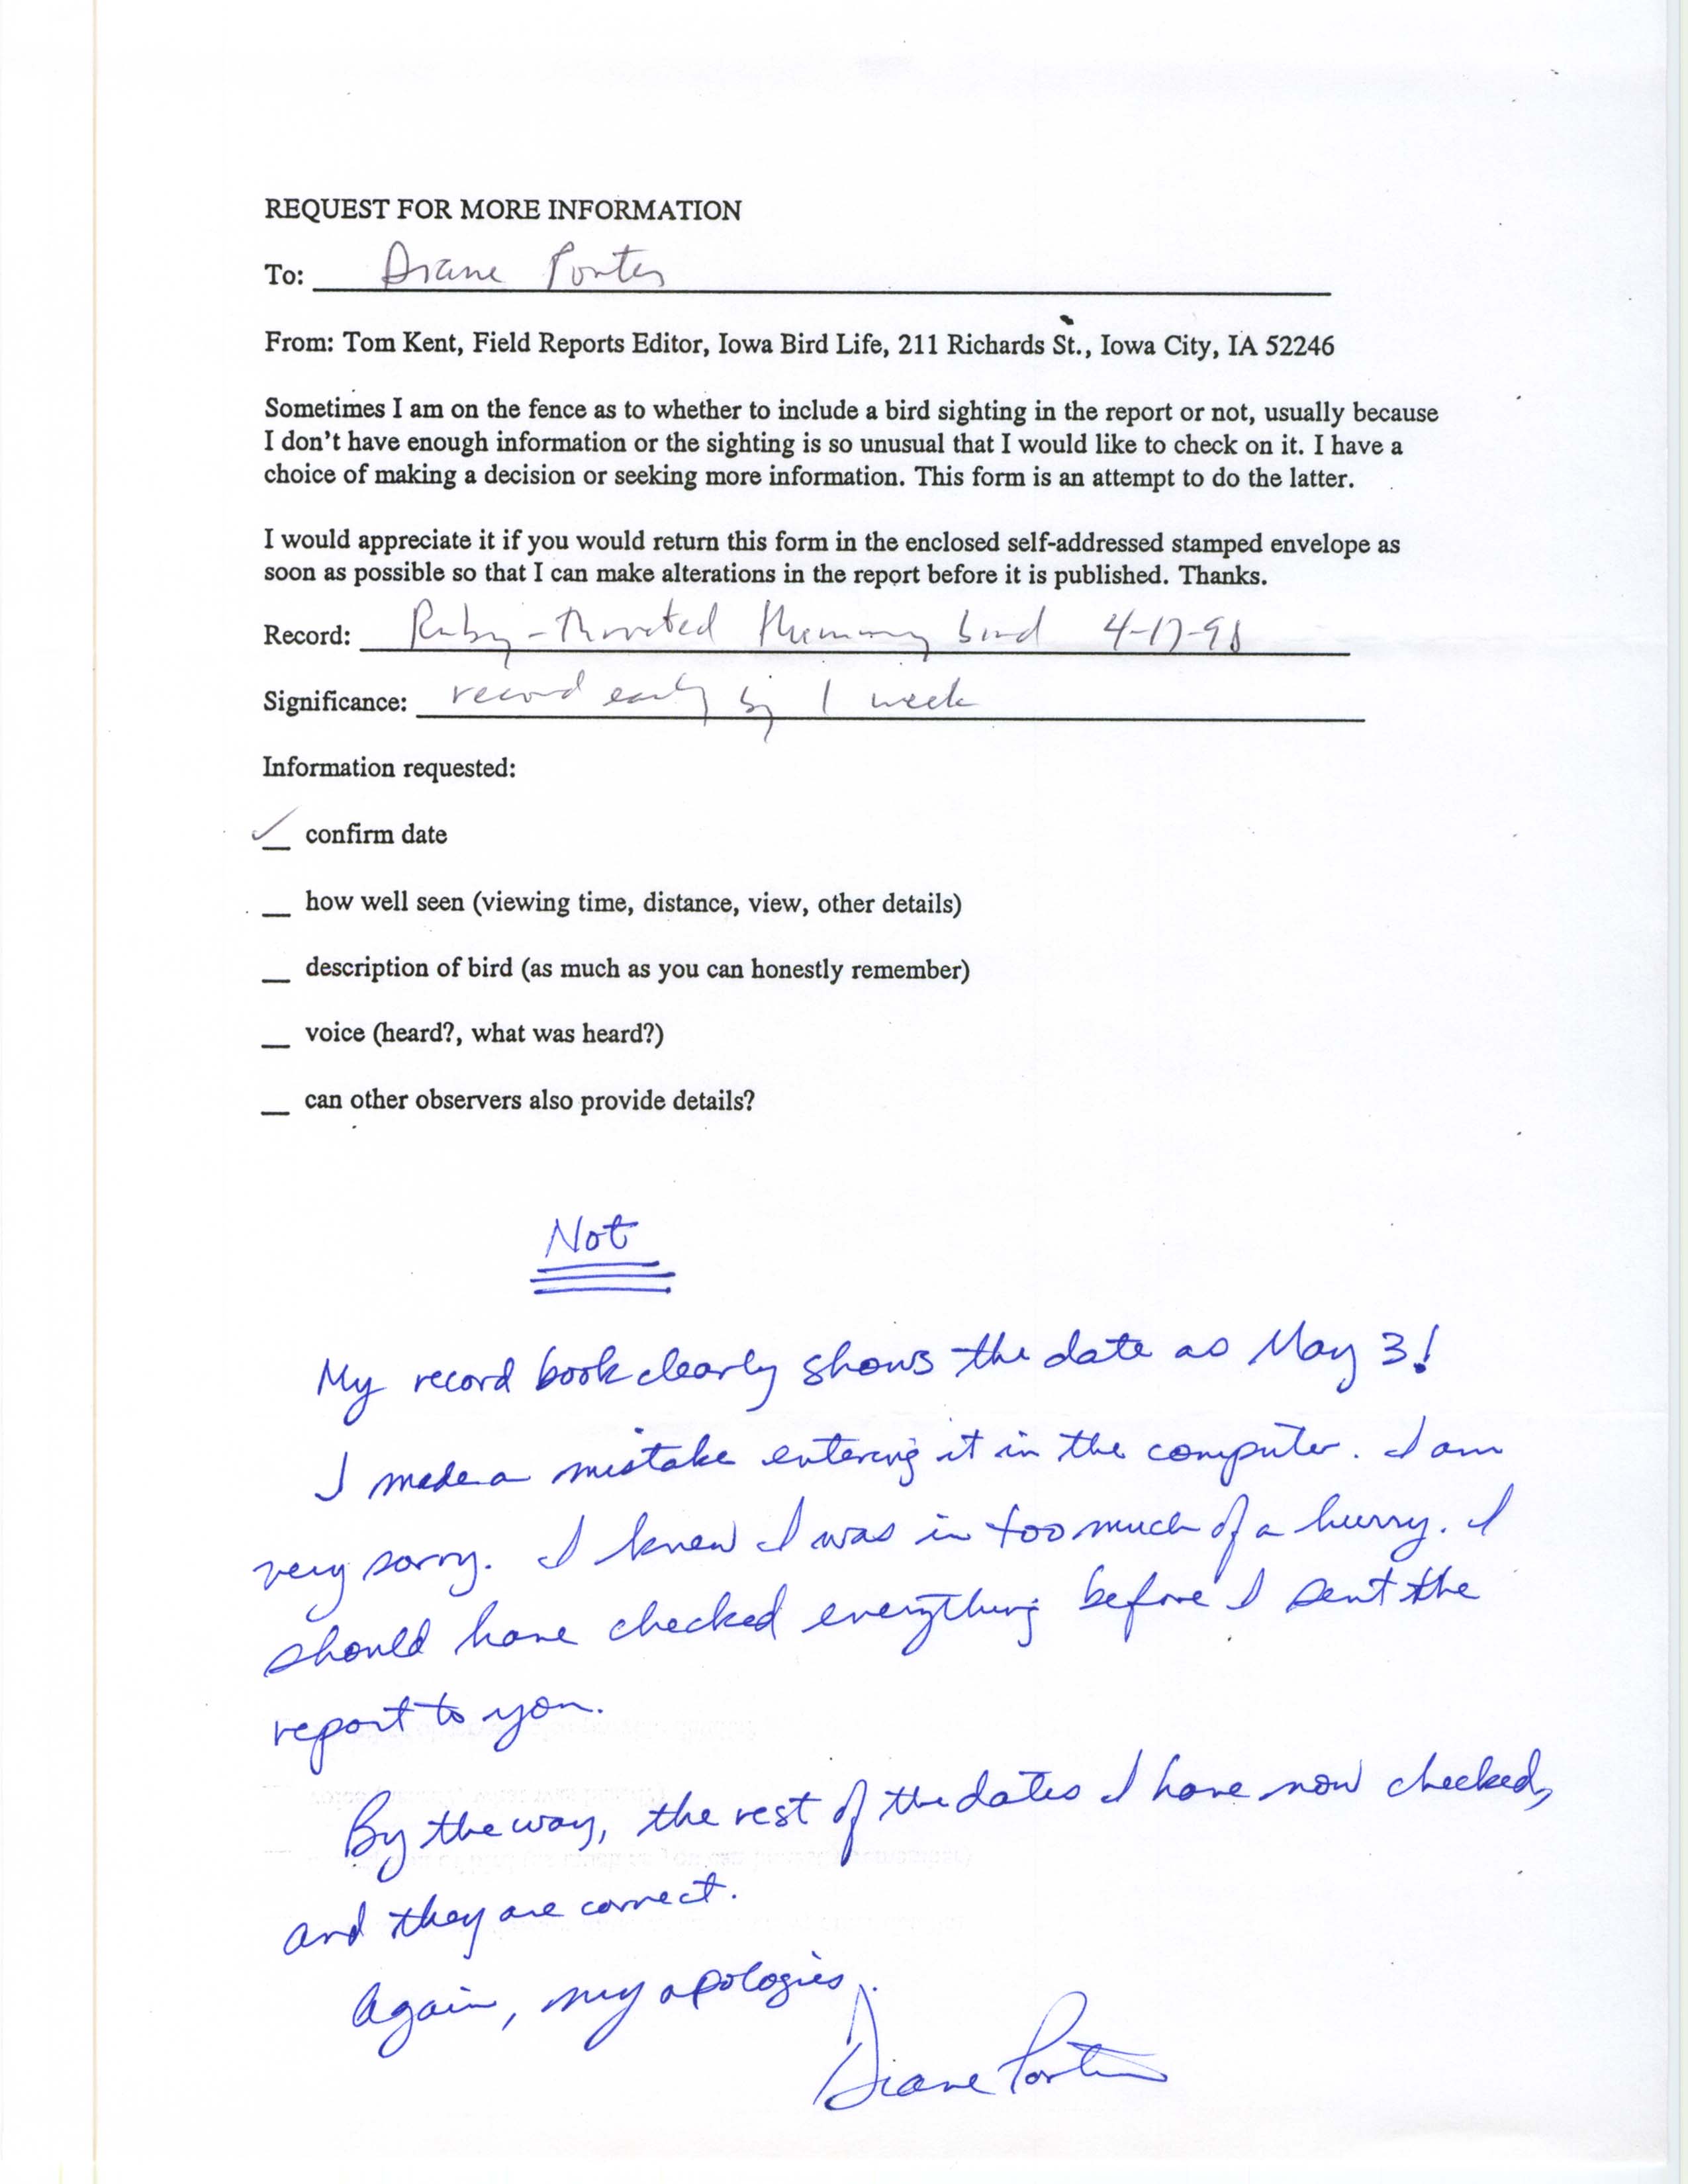 Thomas Kent letter to Diane Porter regarding request for more information, spring 1998